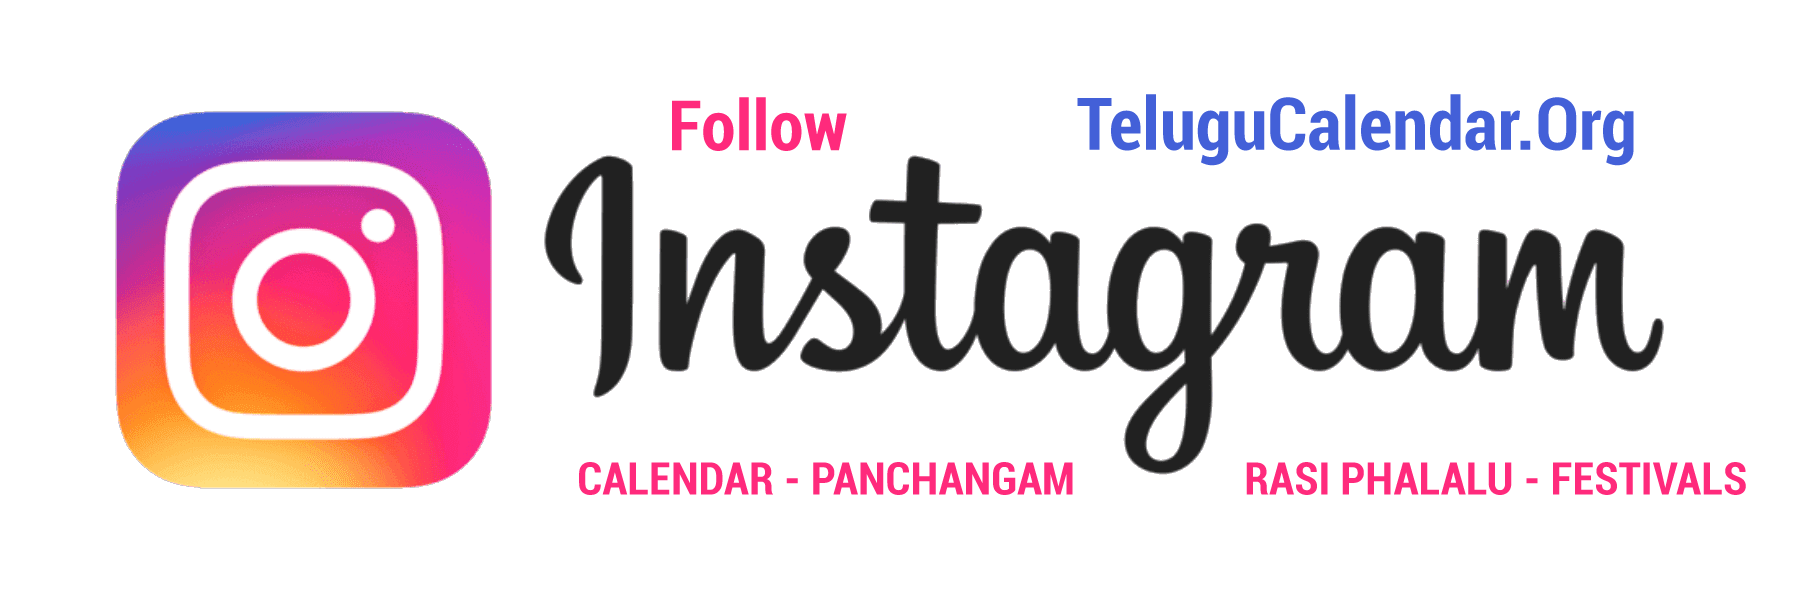 Telugu Calendar Instagram